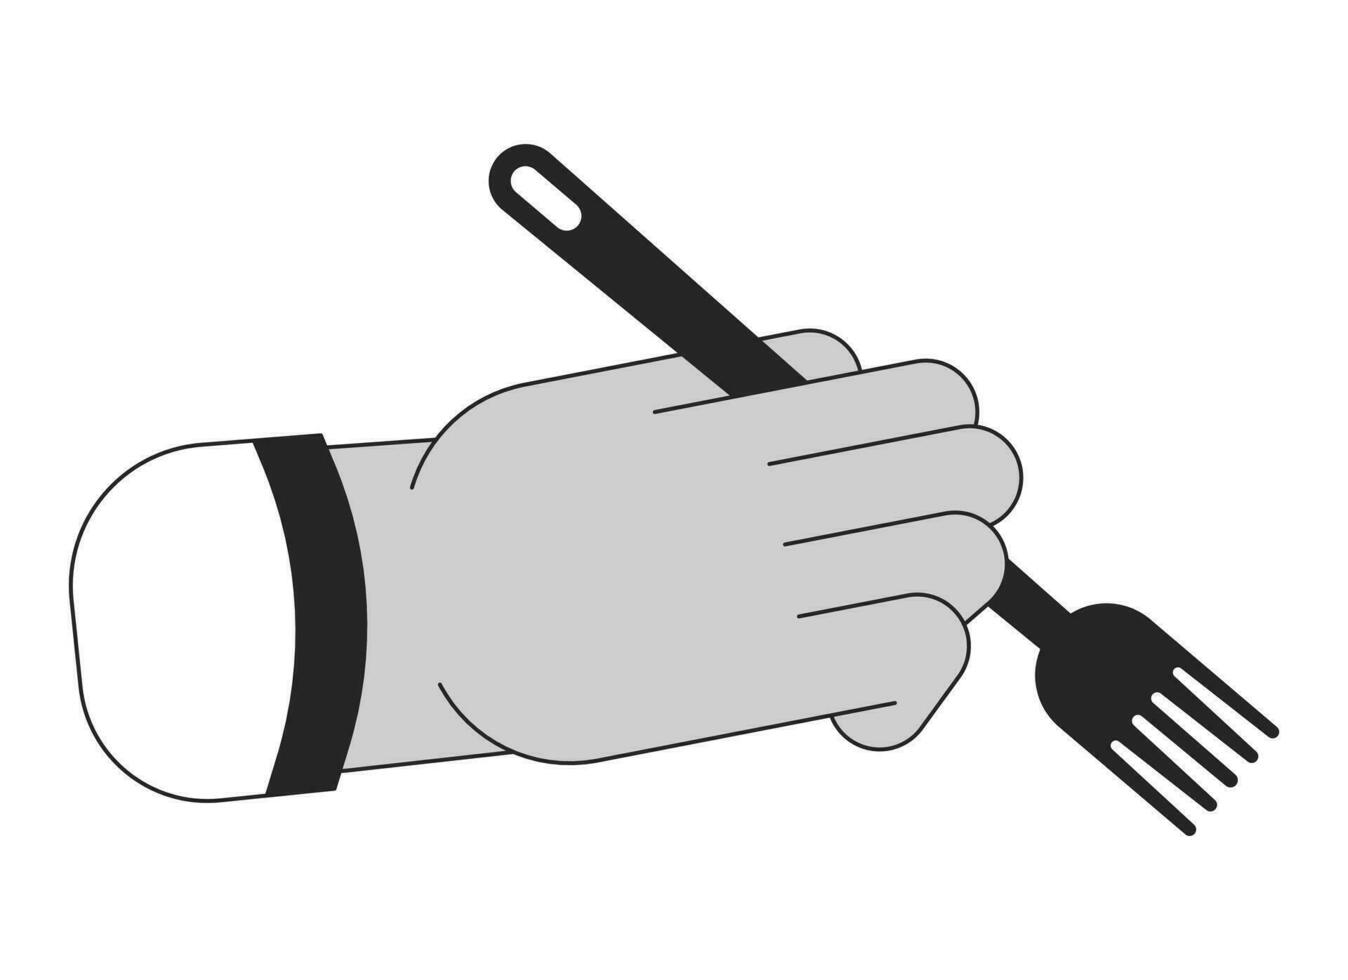 Holding fork cartoon human hand outline illustration vector